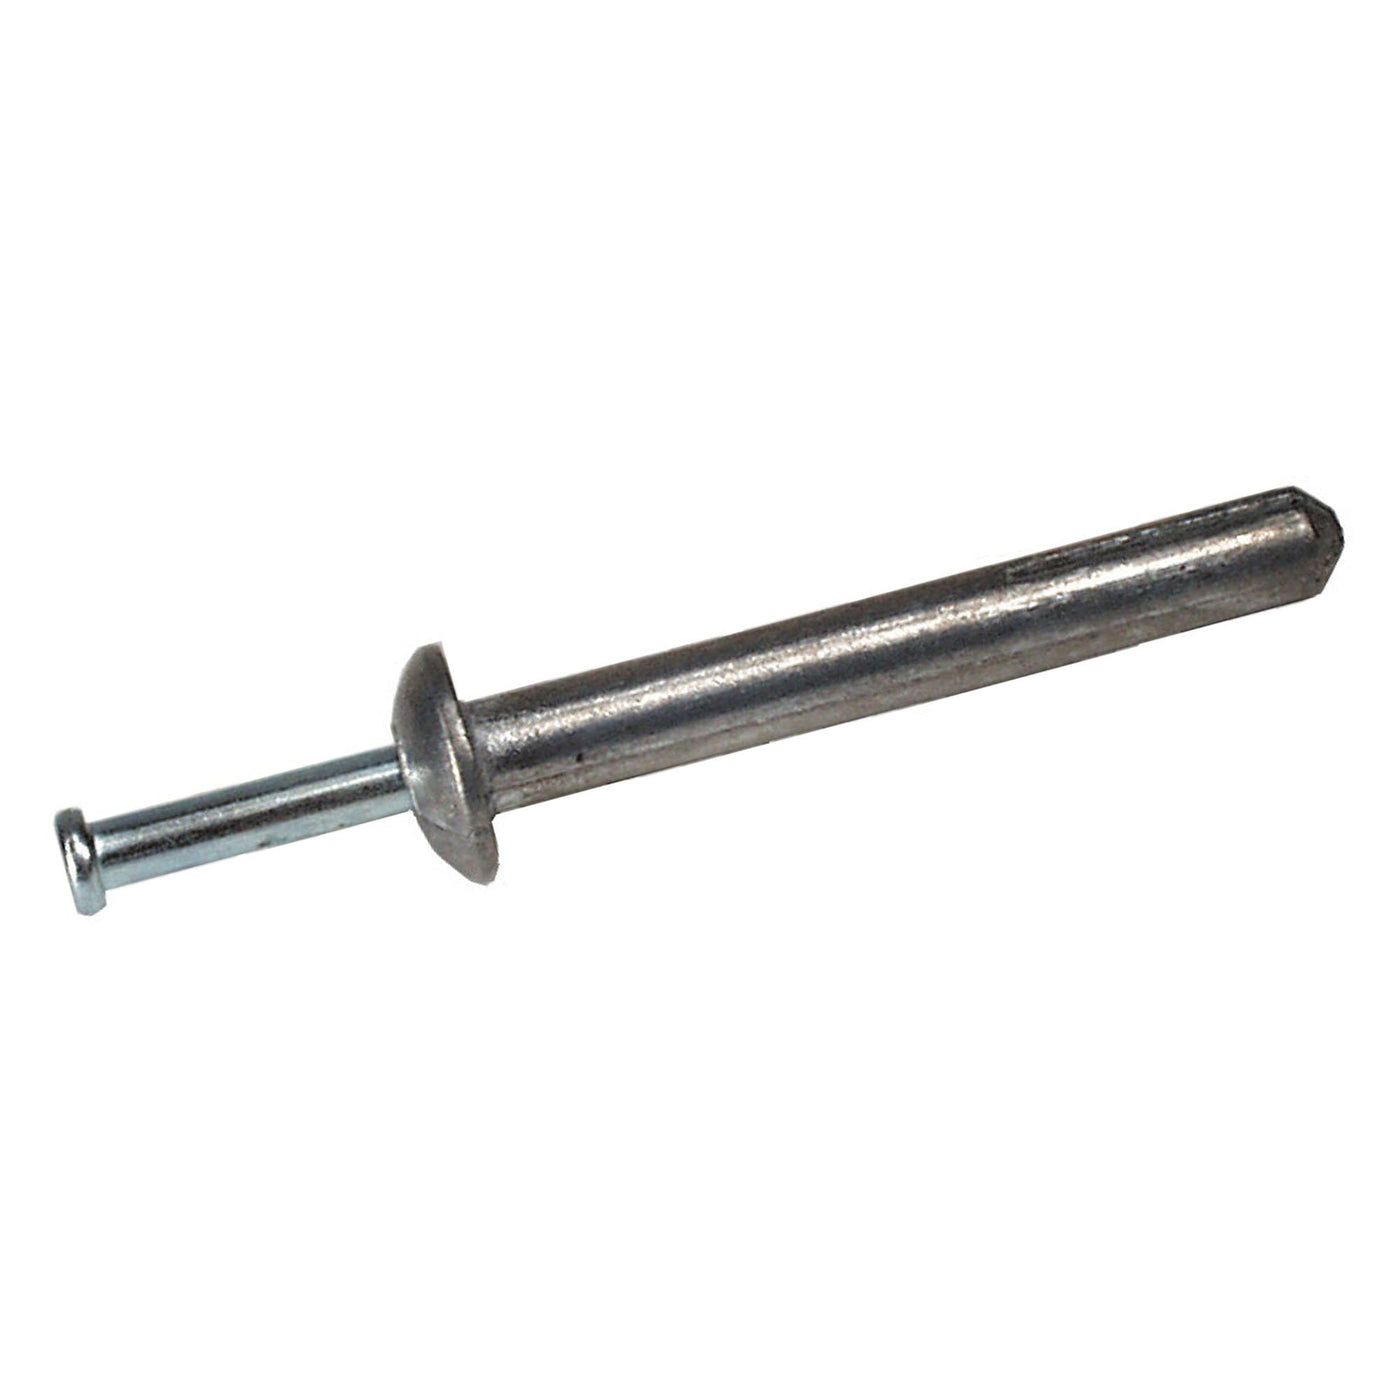 1/4 x 1 Simpson Zinc Nailon™ Pin Drive Anchor Mushroom Head 304 Stainless Steel Pin (100)